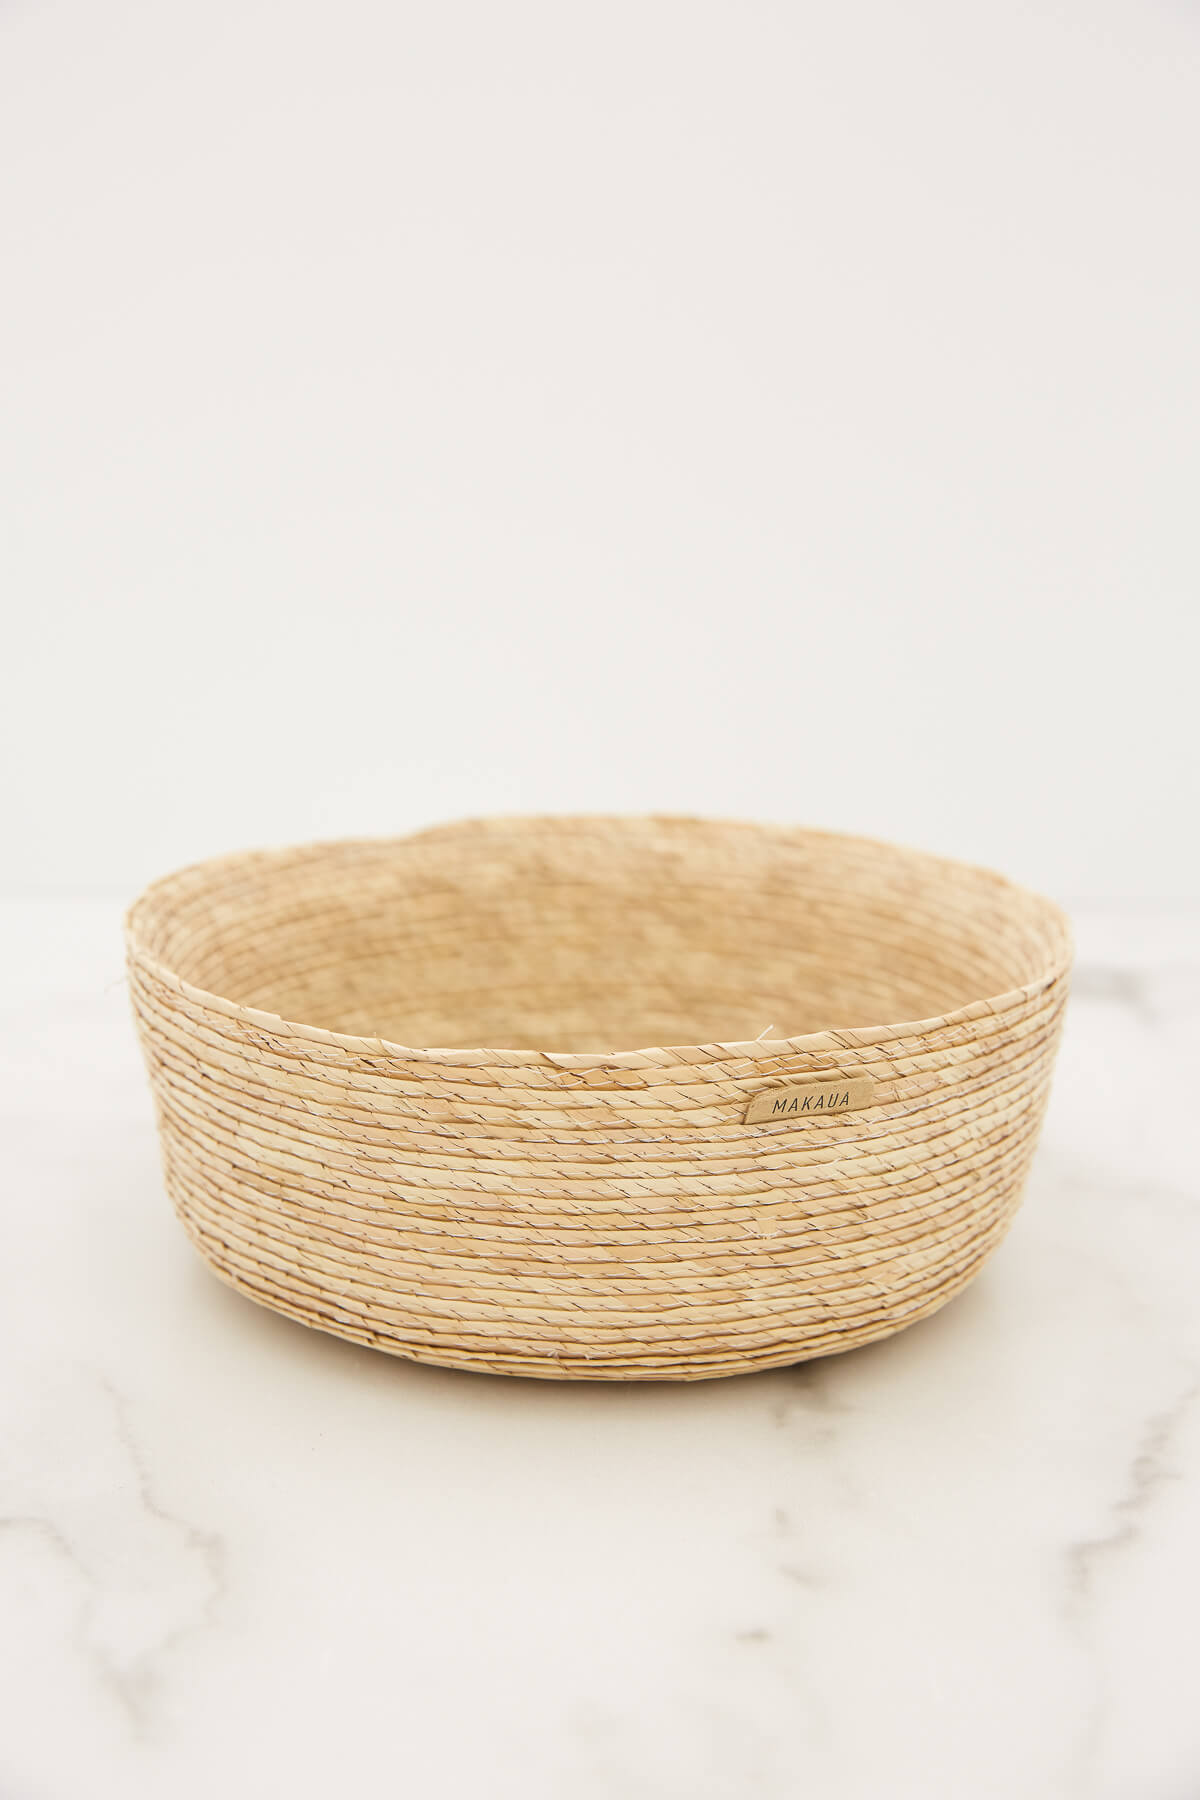 Makaua Medium Round Basket